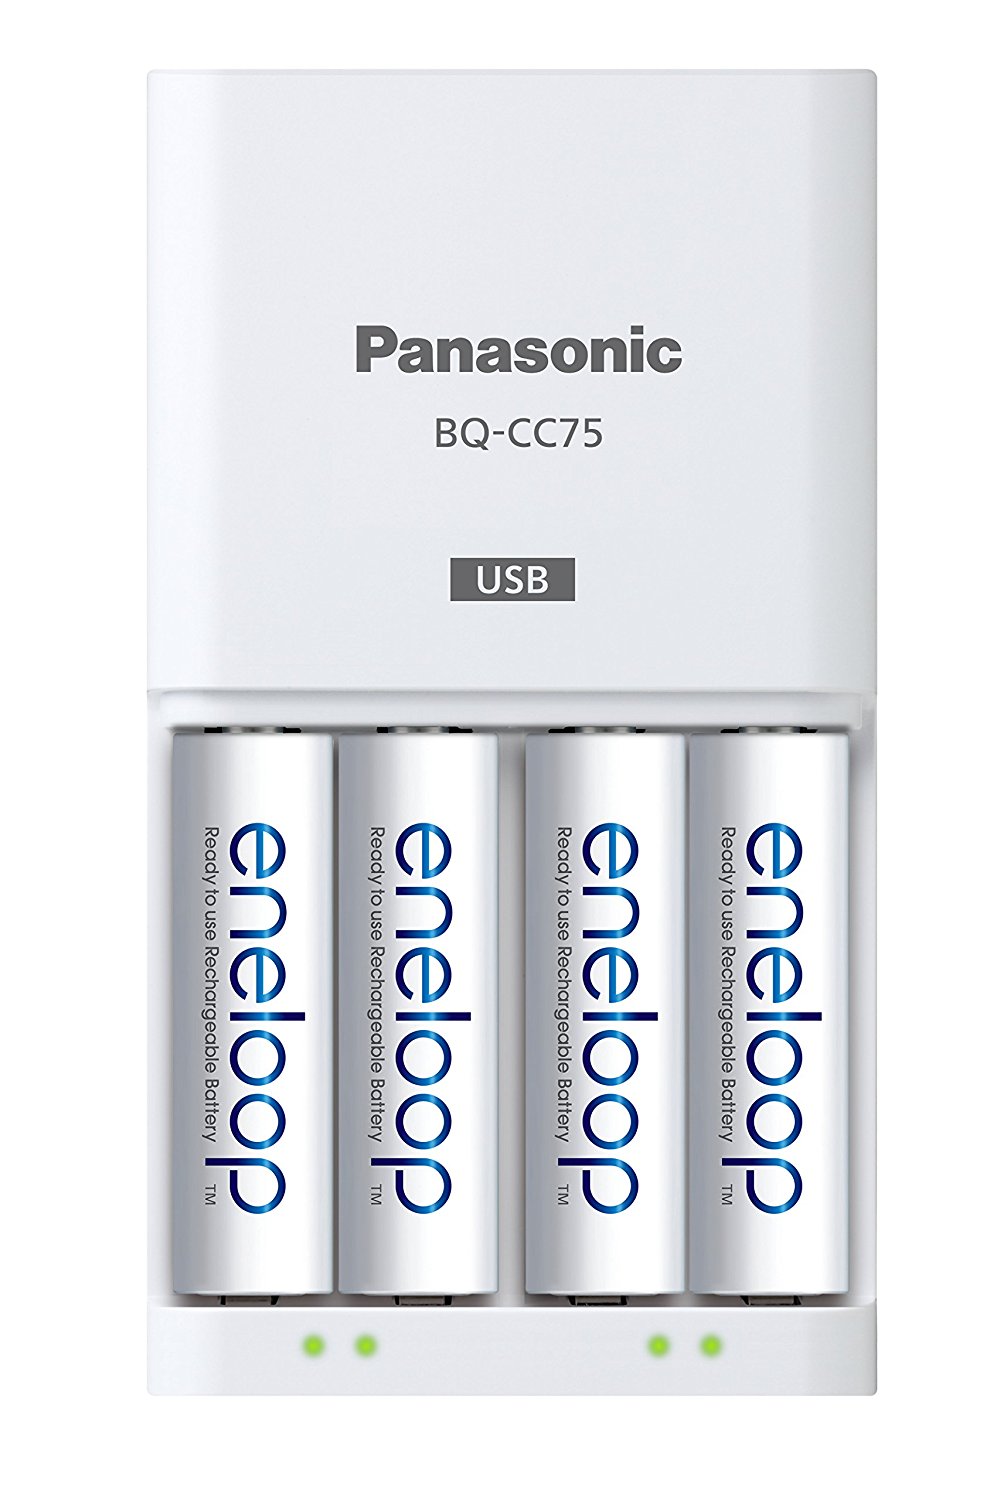 Panasonic bq-cc75